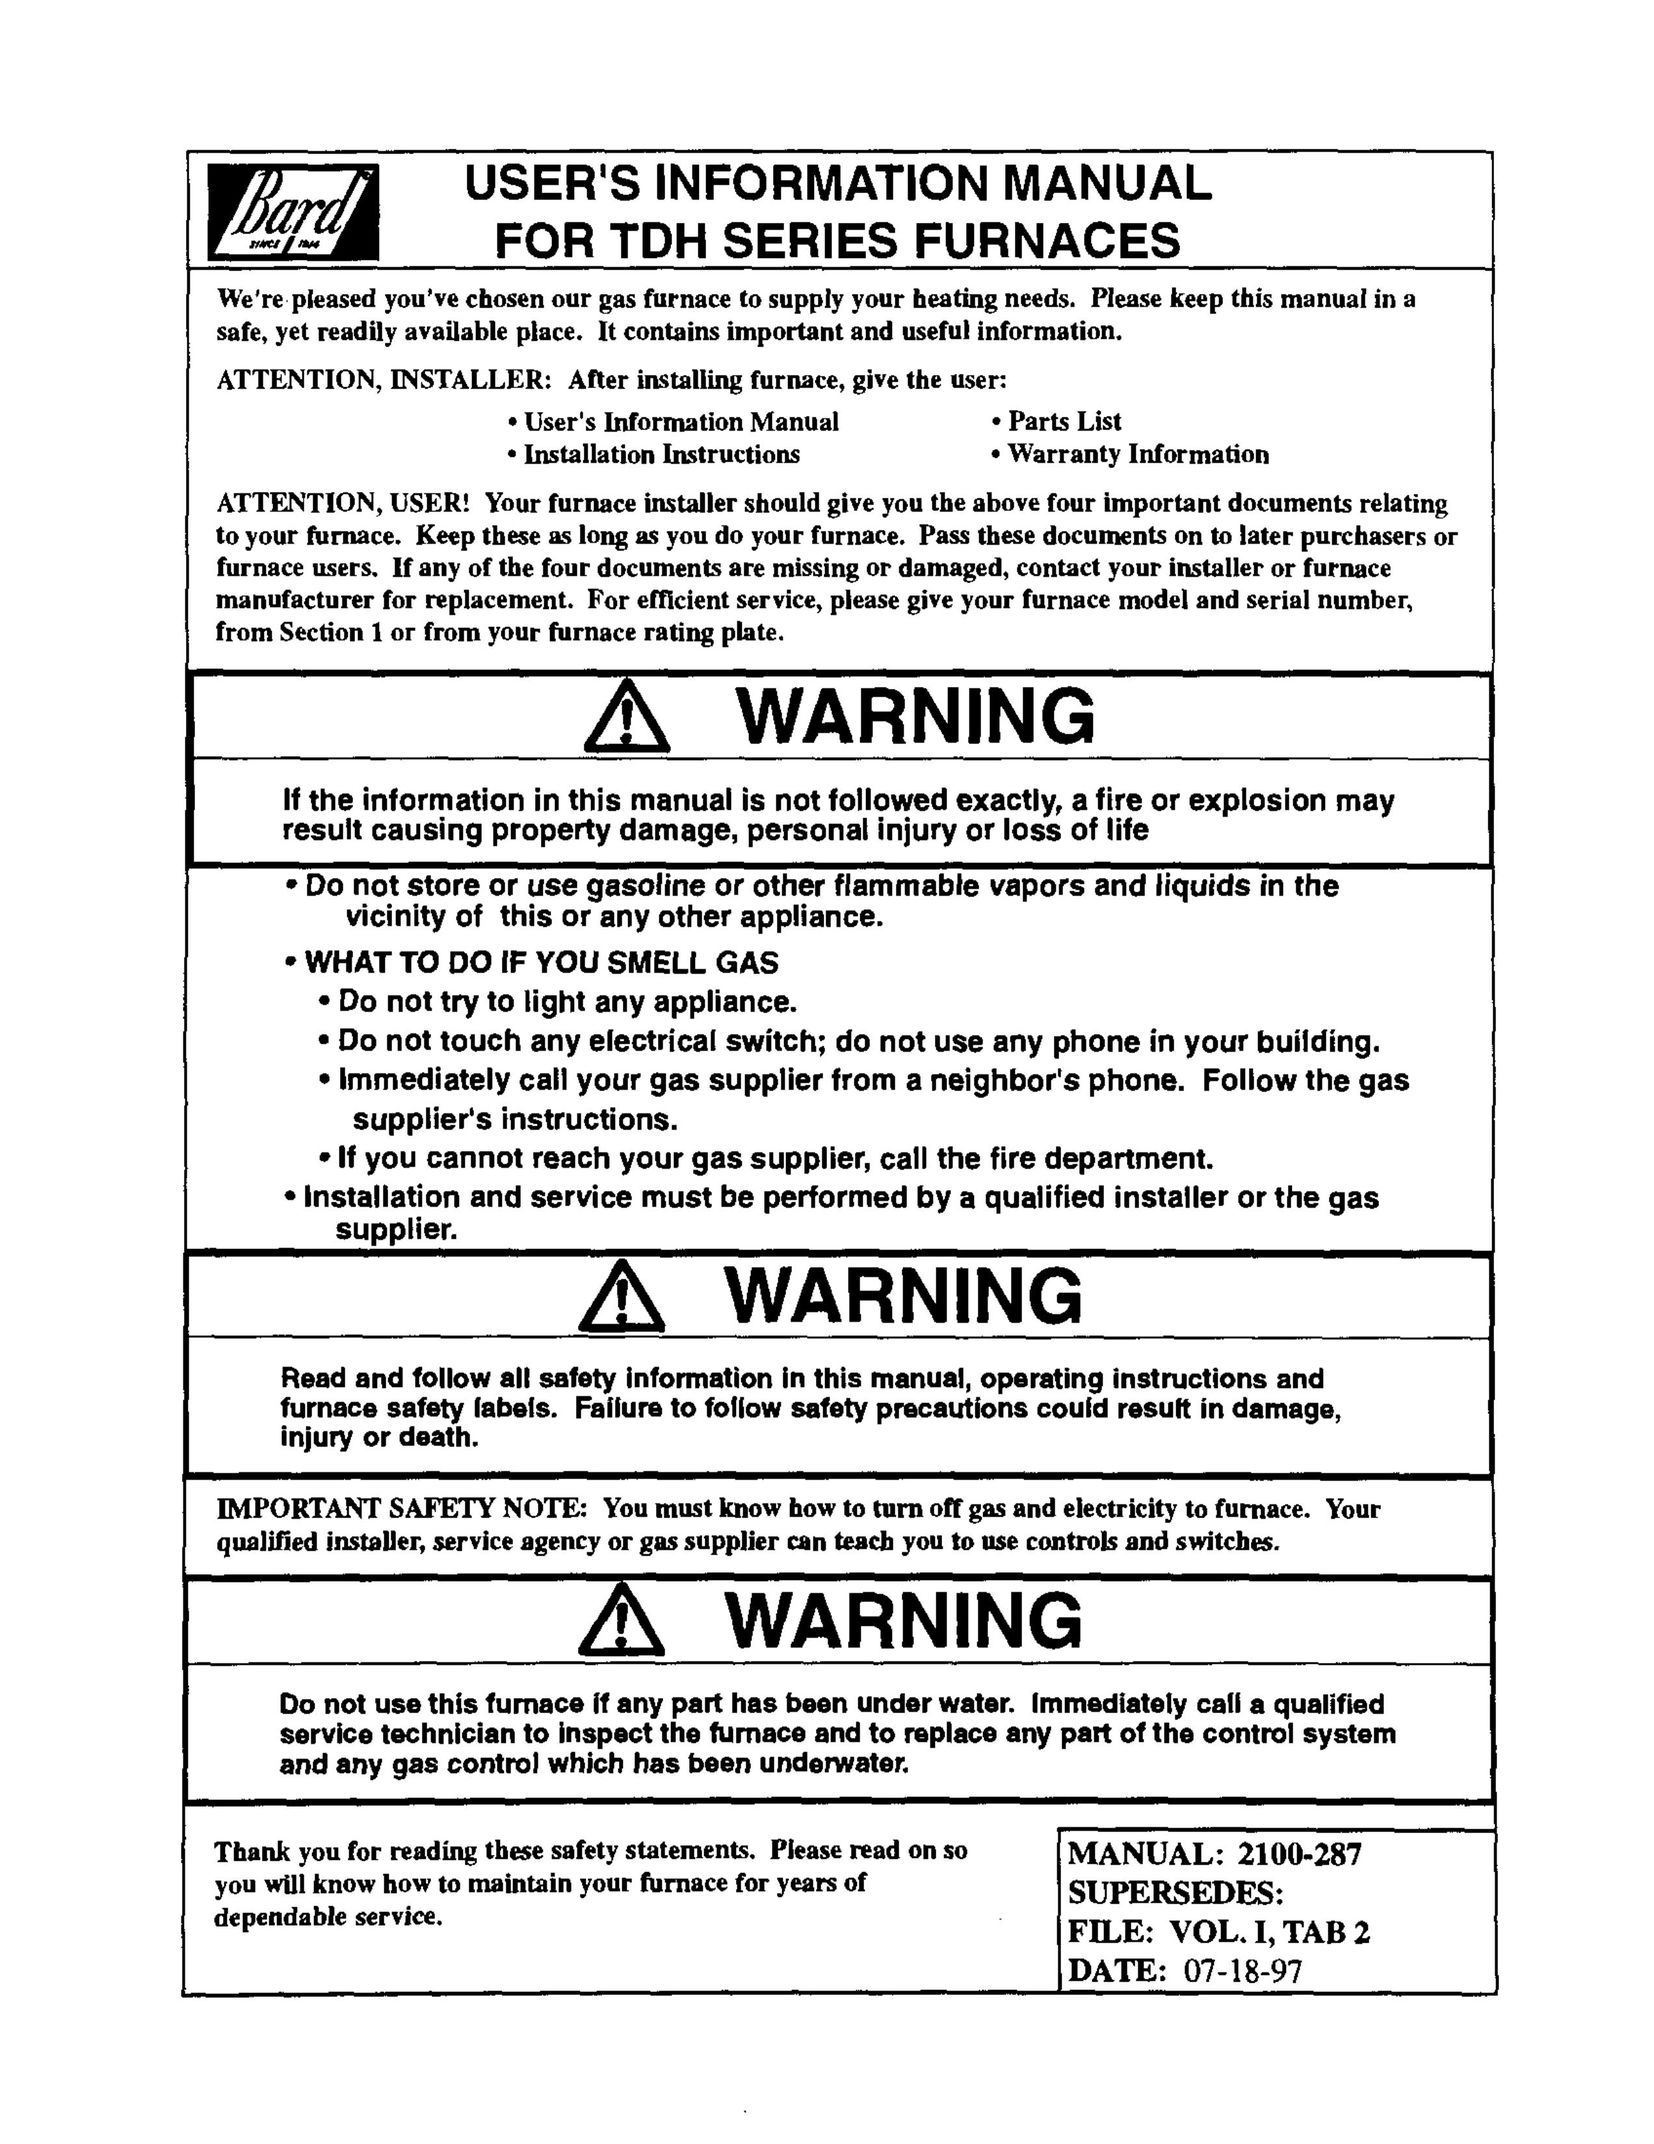 Bard 2100-287 Furnace User Manual